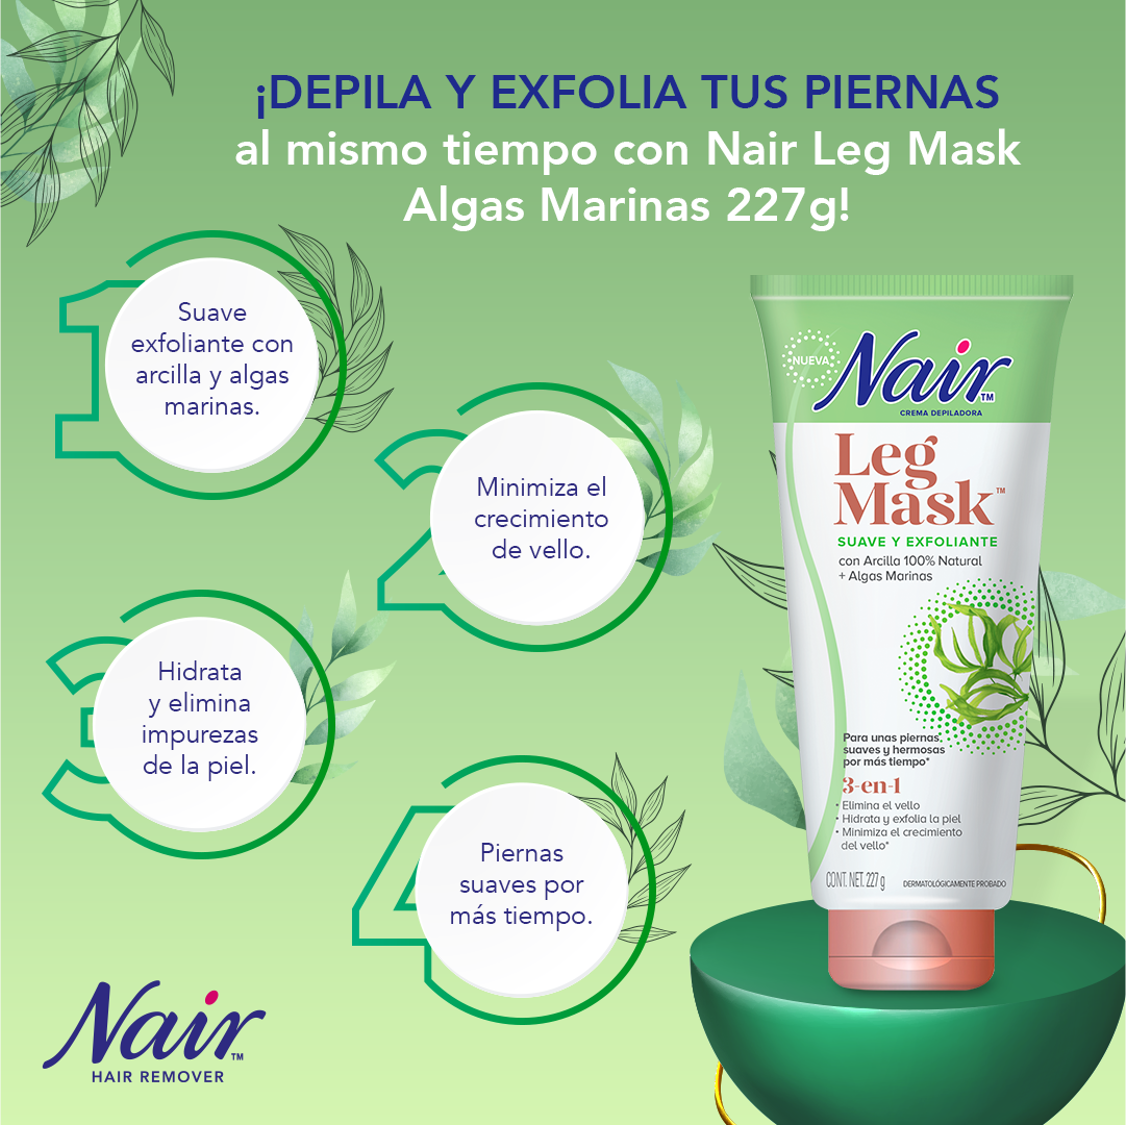 Crema Depiladora "Mascaras para Piernas" Algas Marinas 227g